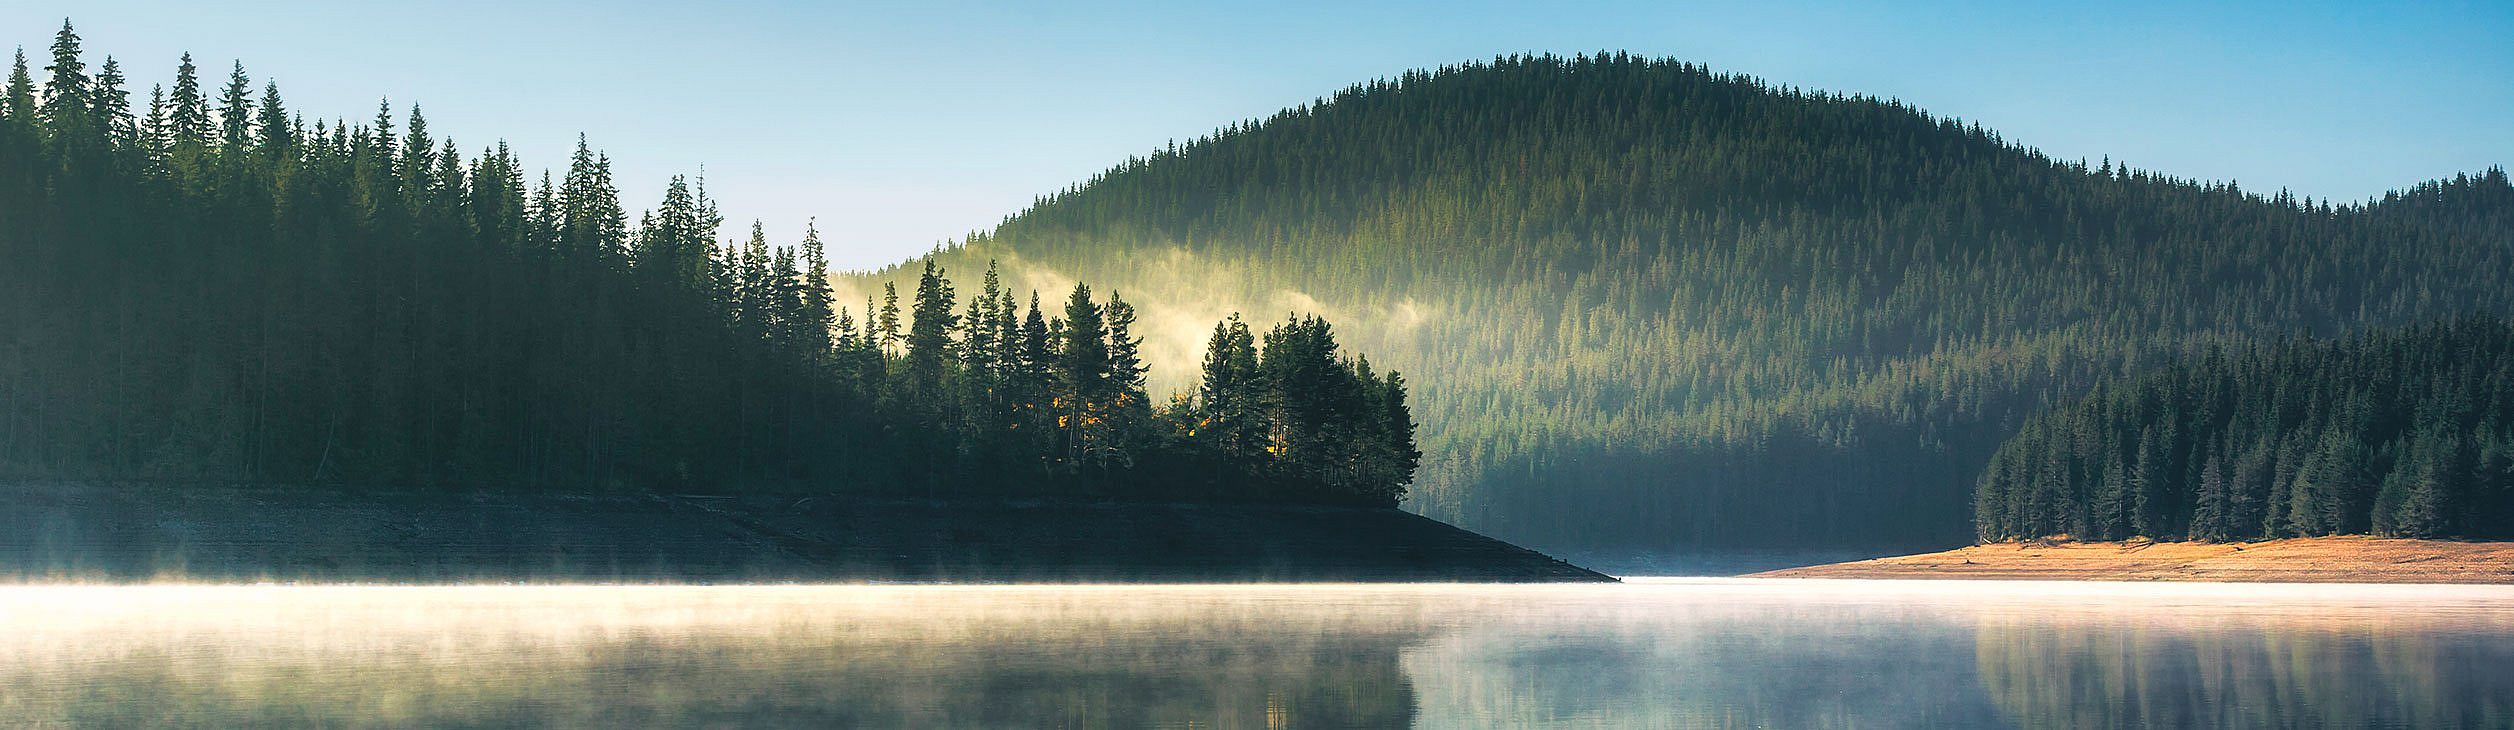 Beautiful Lake and mountains, morning shot